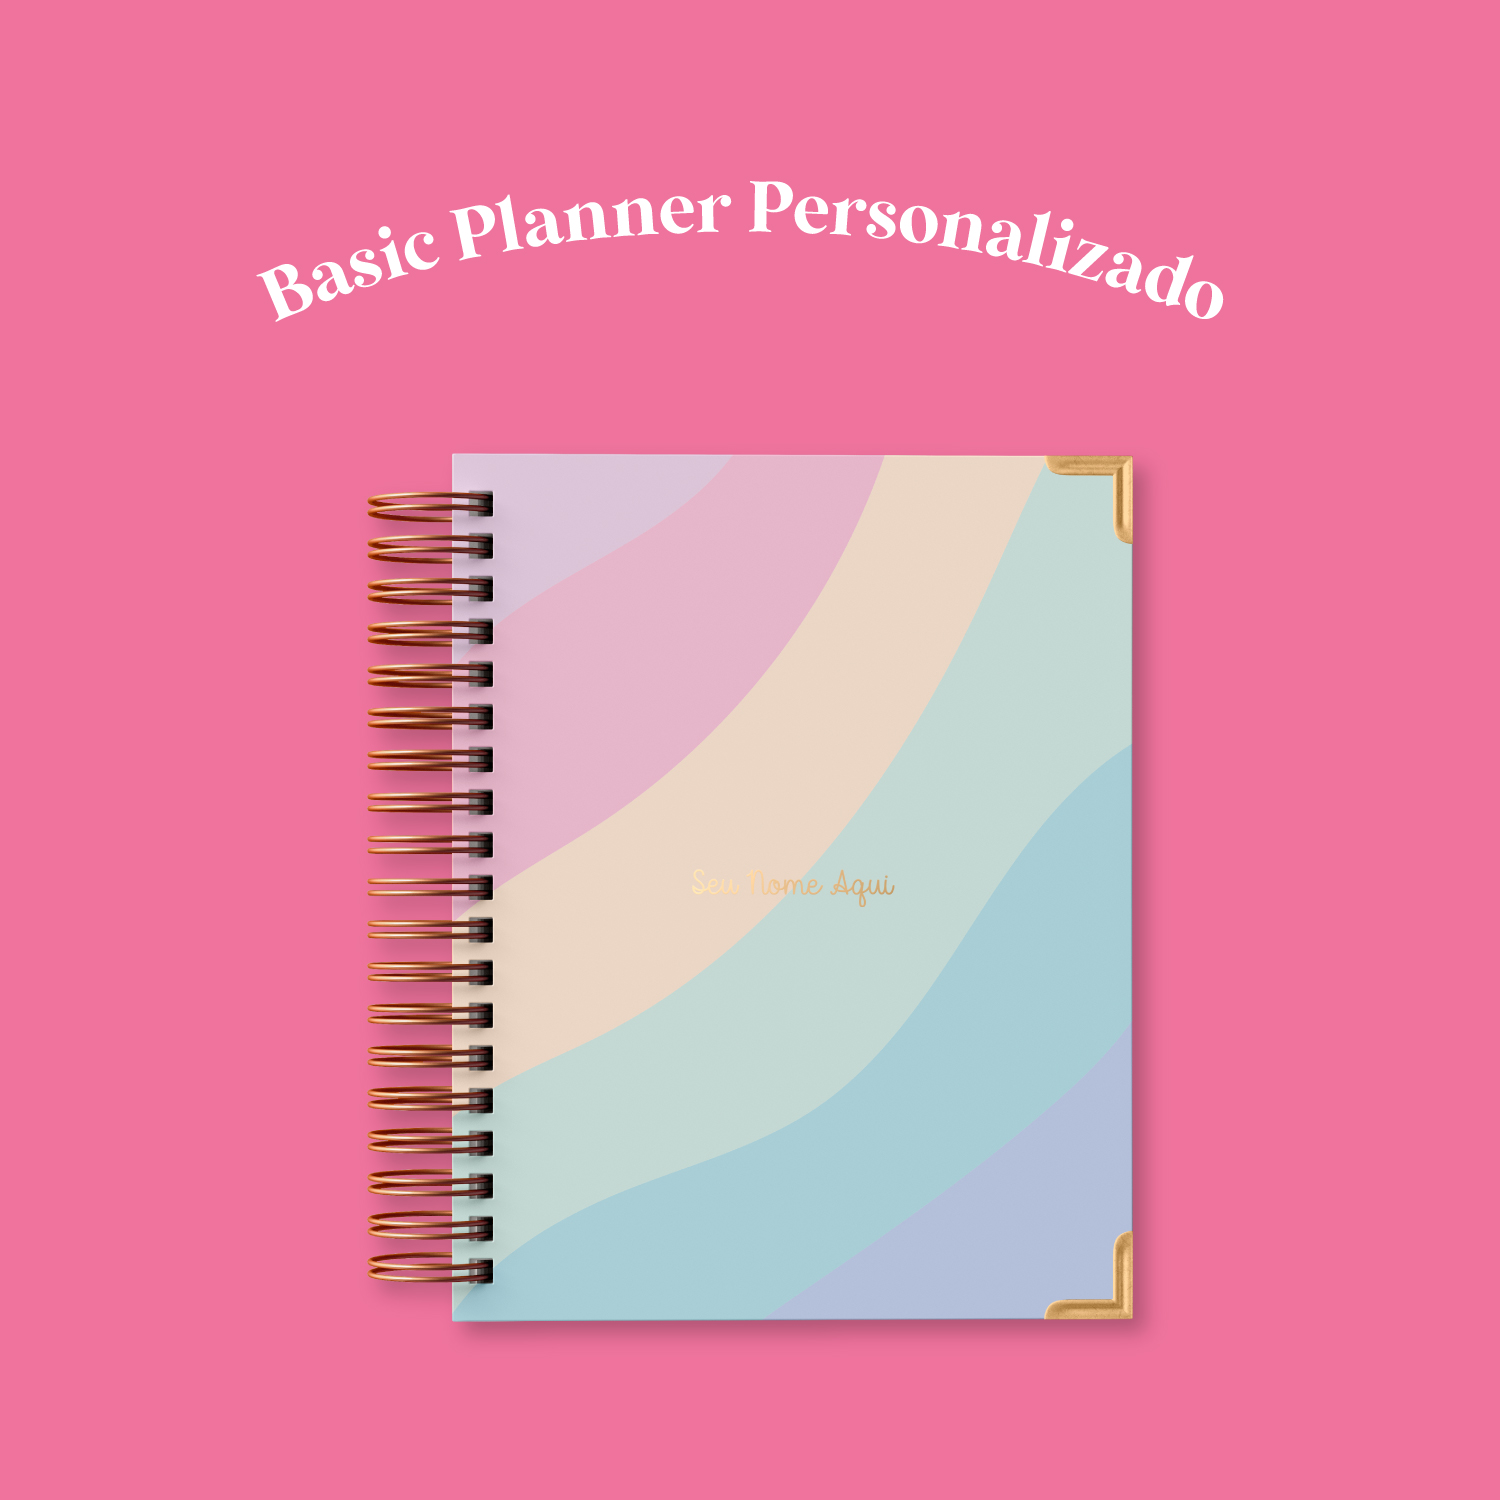 Basic Planner Personalizado